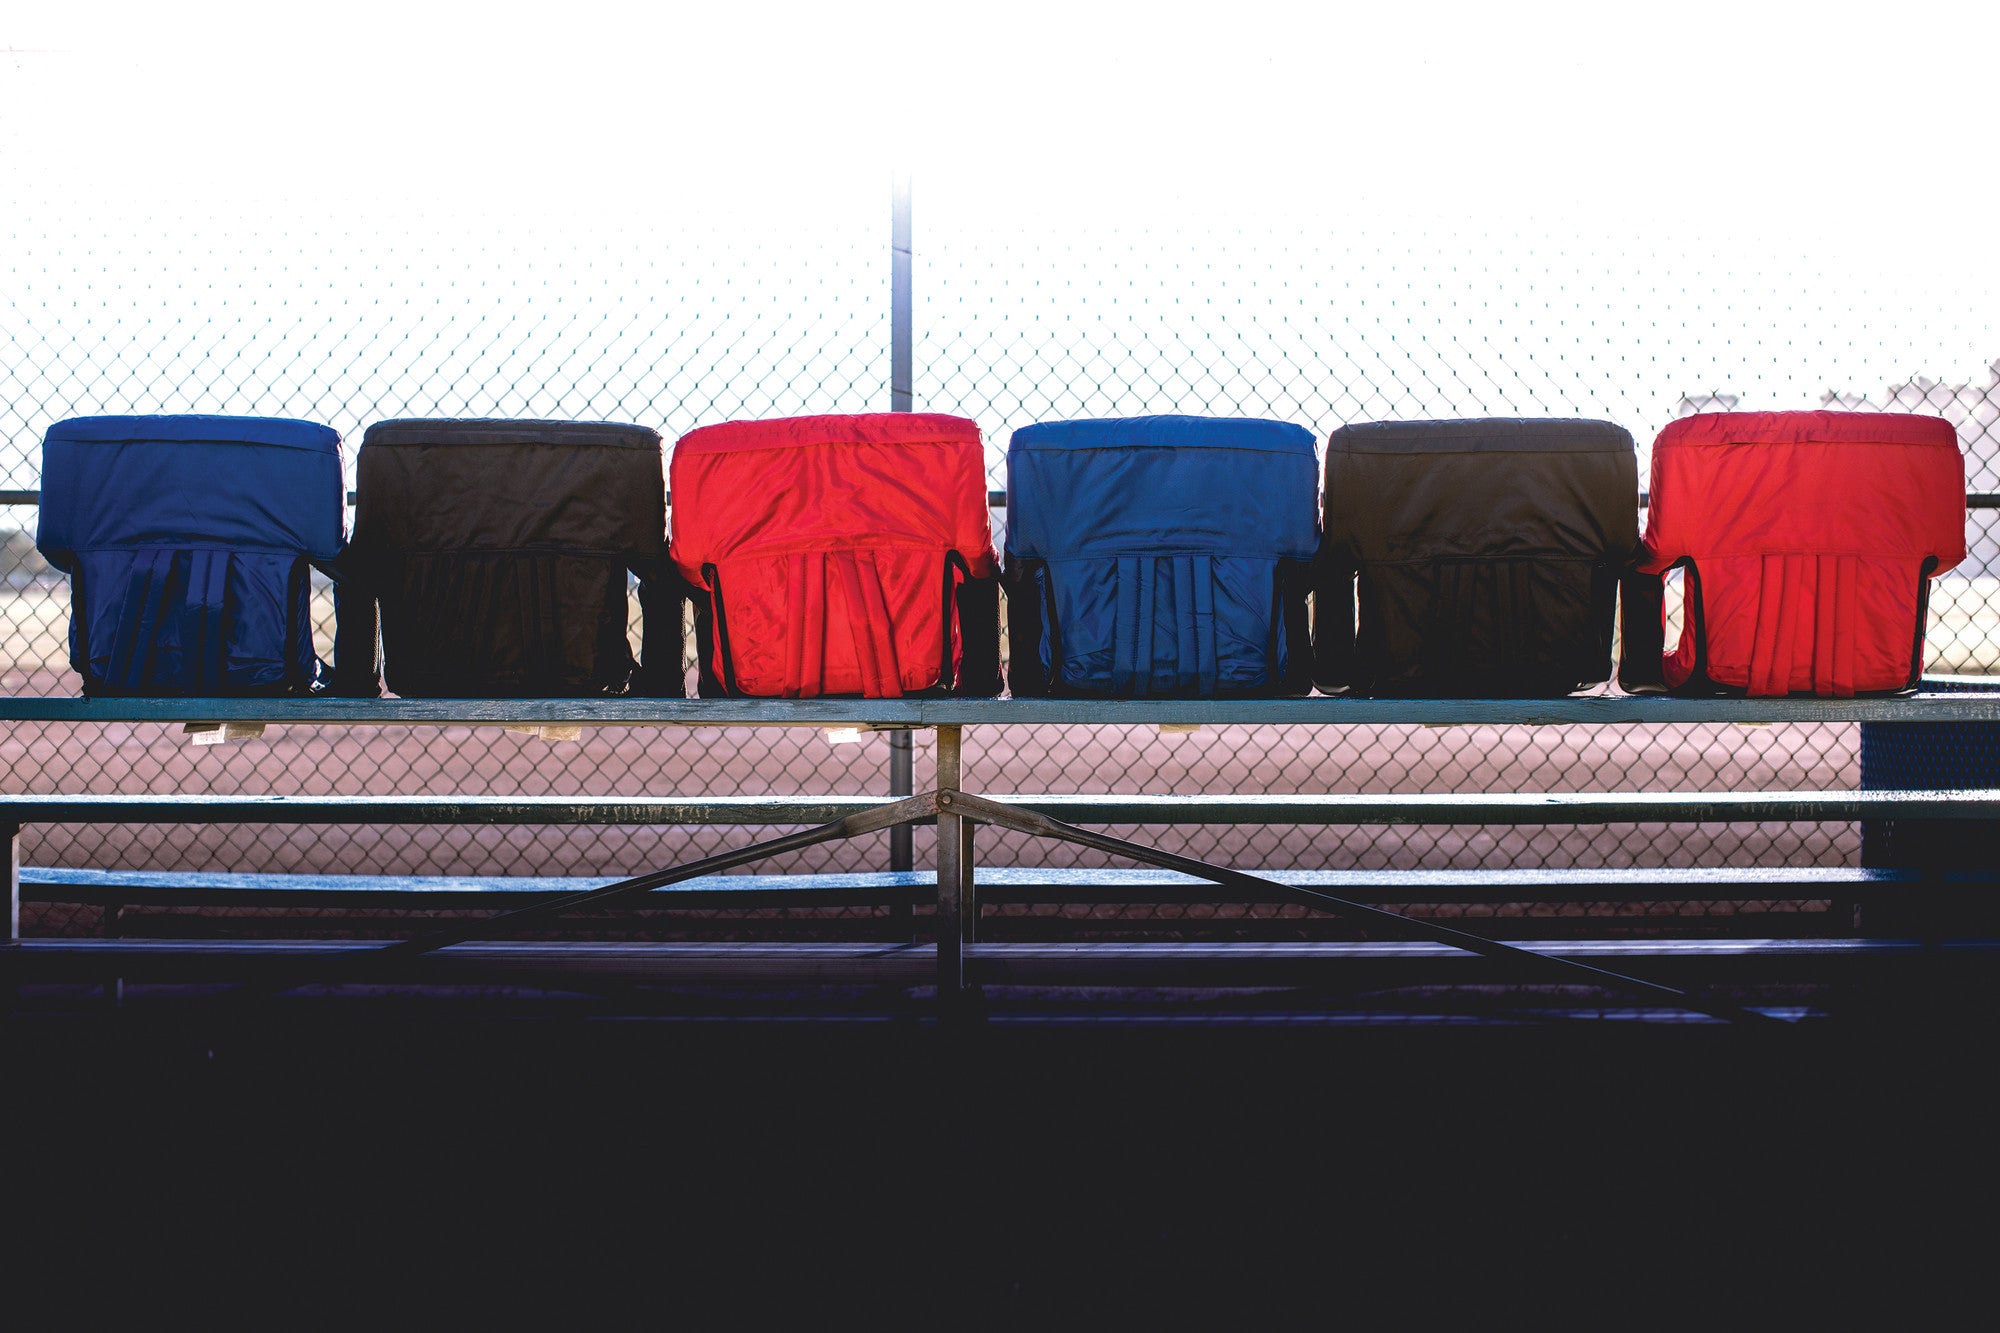 Iowa Hawkeyes - Ventura Portable Reclining Stadium Seat